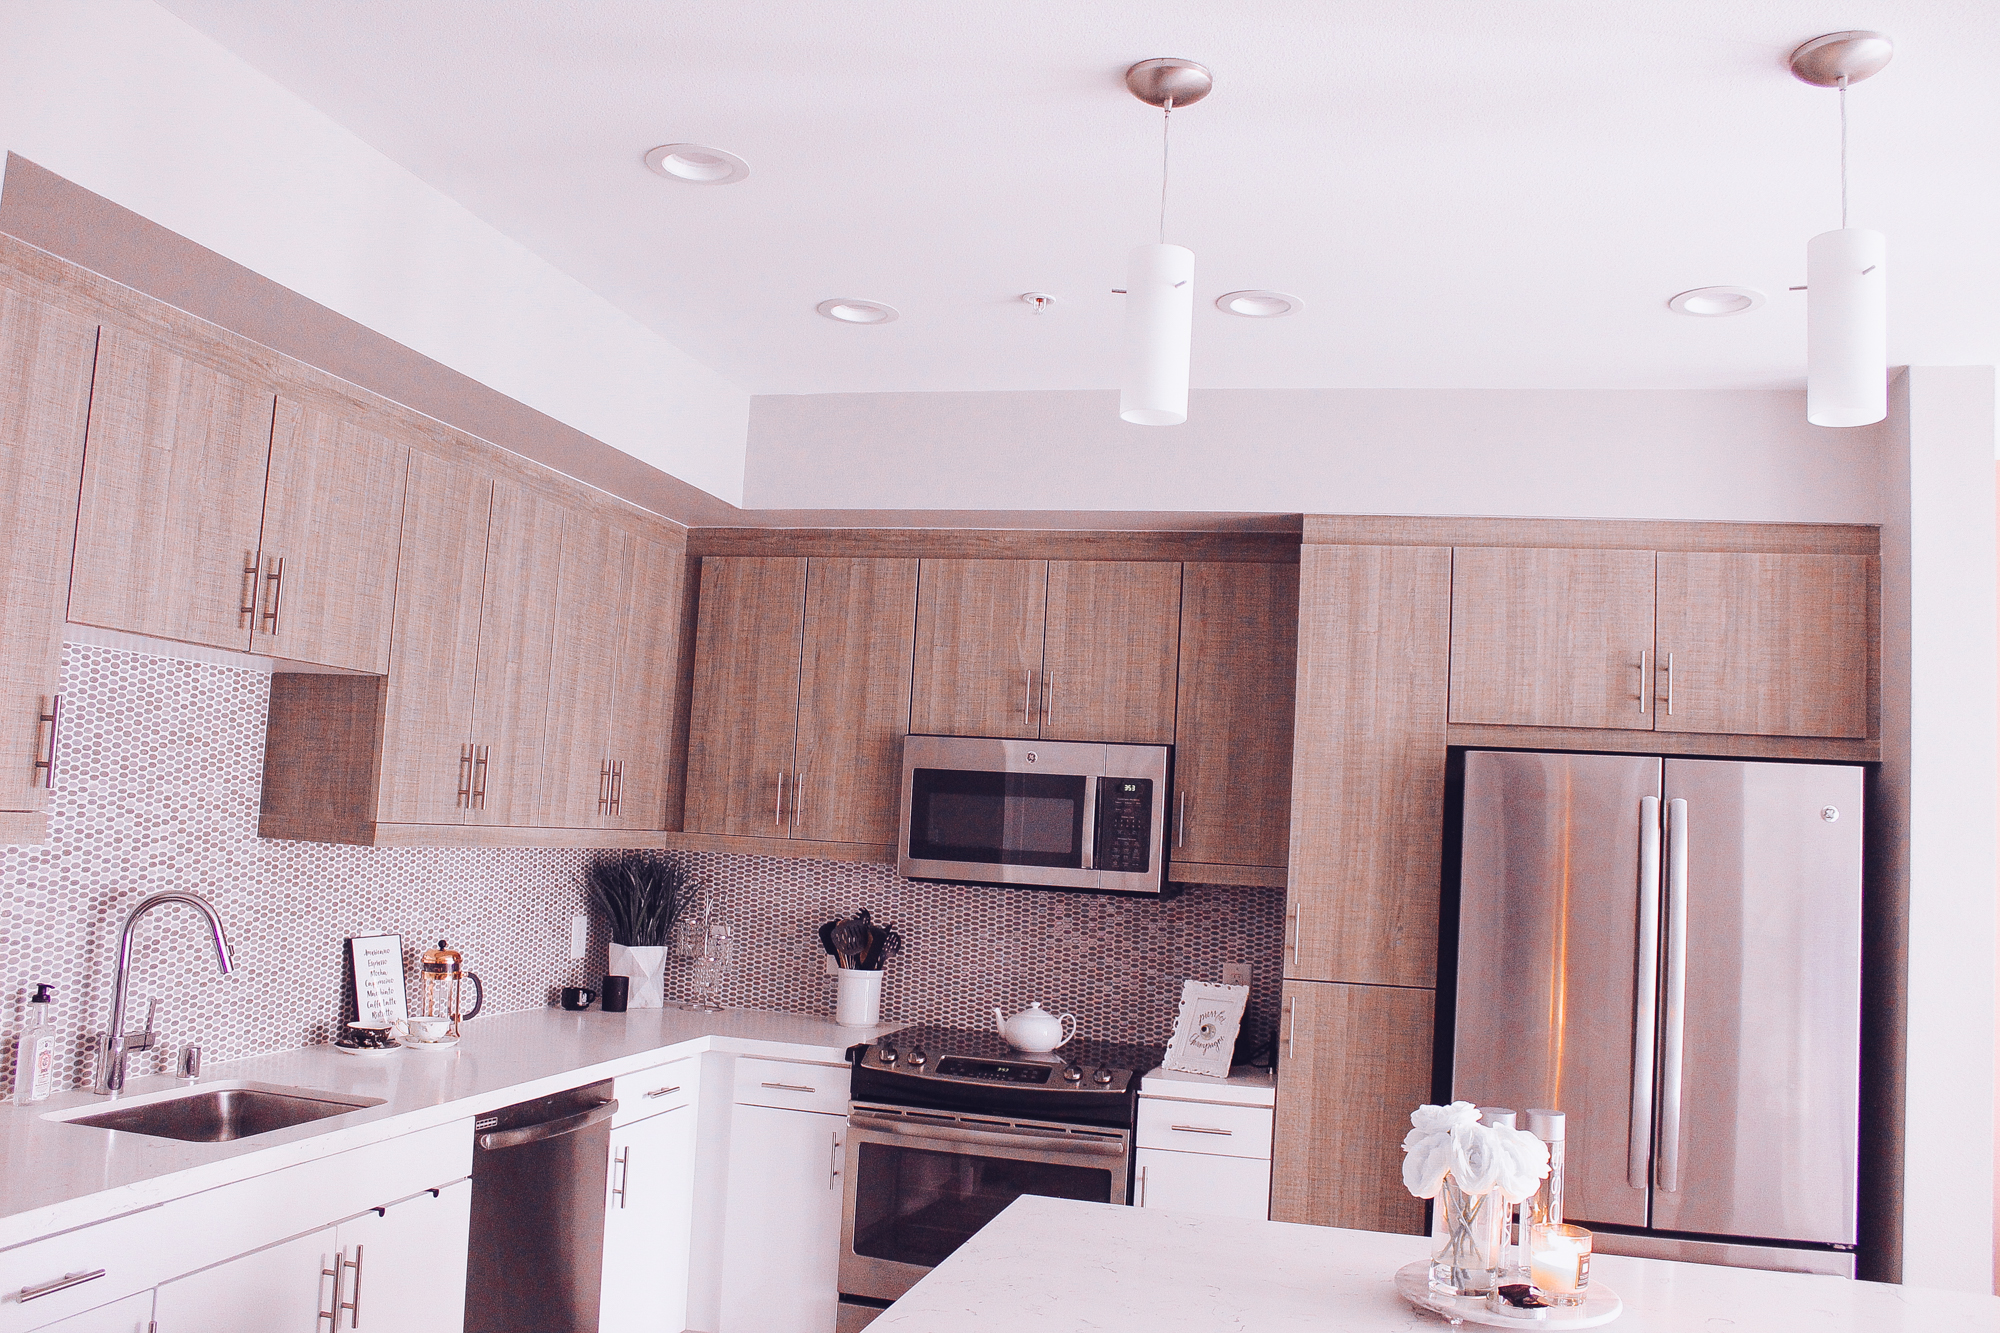 Blondie in the City | Minimal Home Decor | Kitchen Decor | White Marble Kitchen | Neutral Kitchen Decor | #Decor #Home